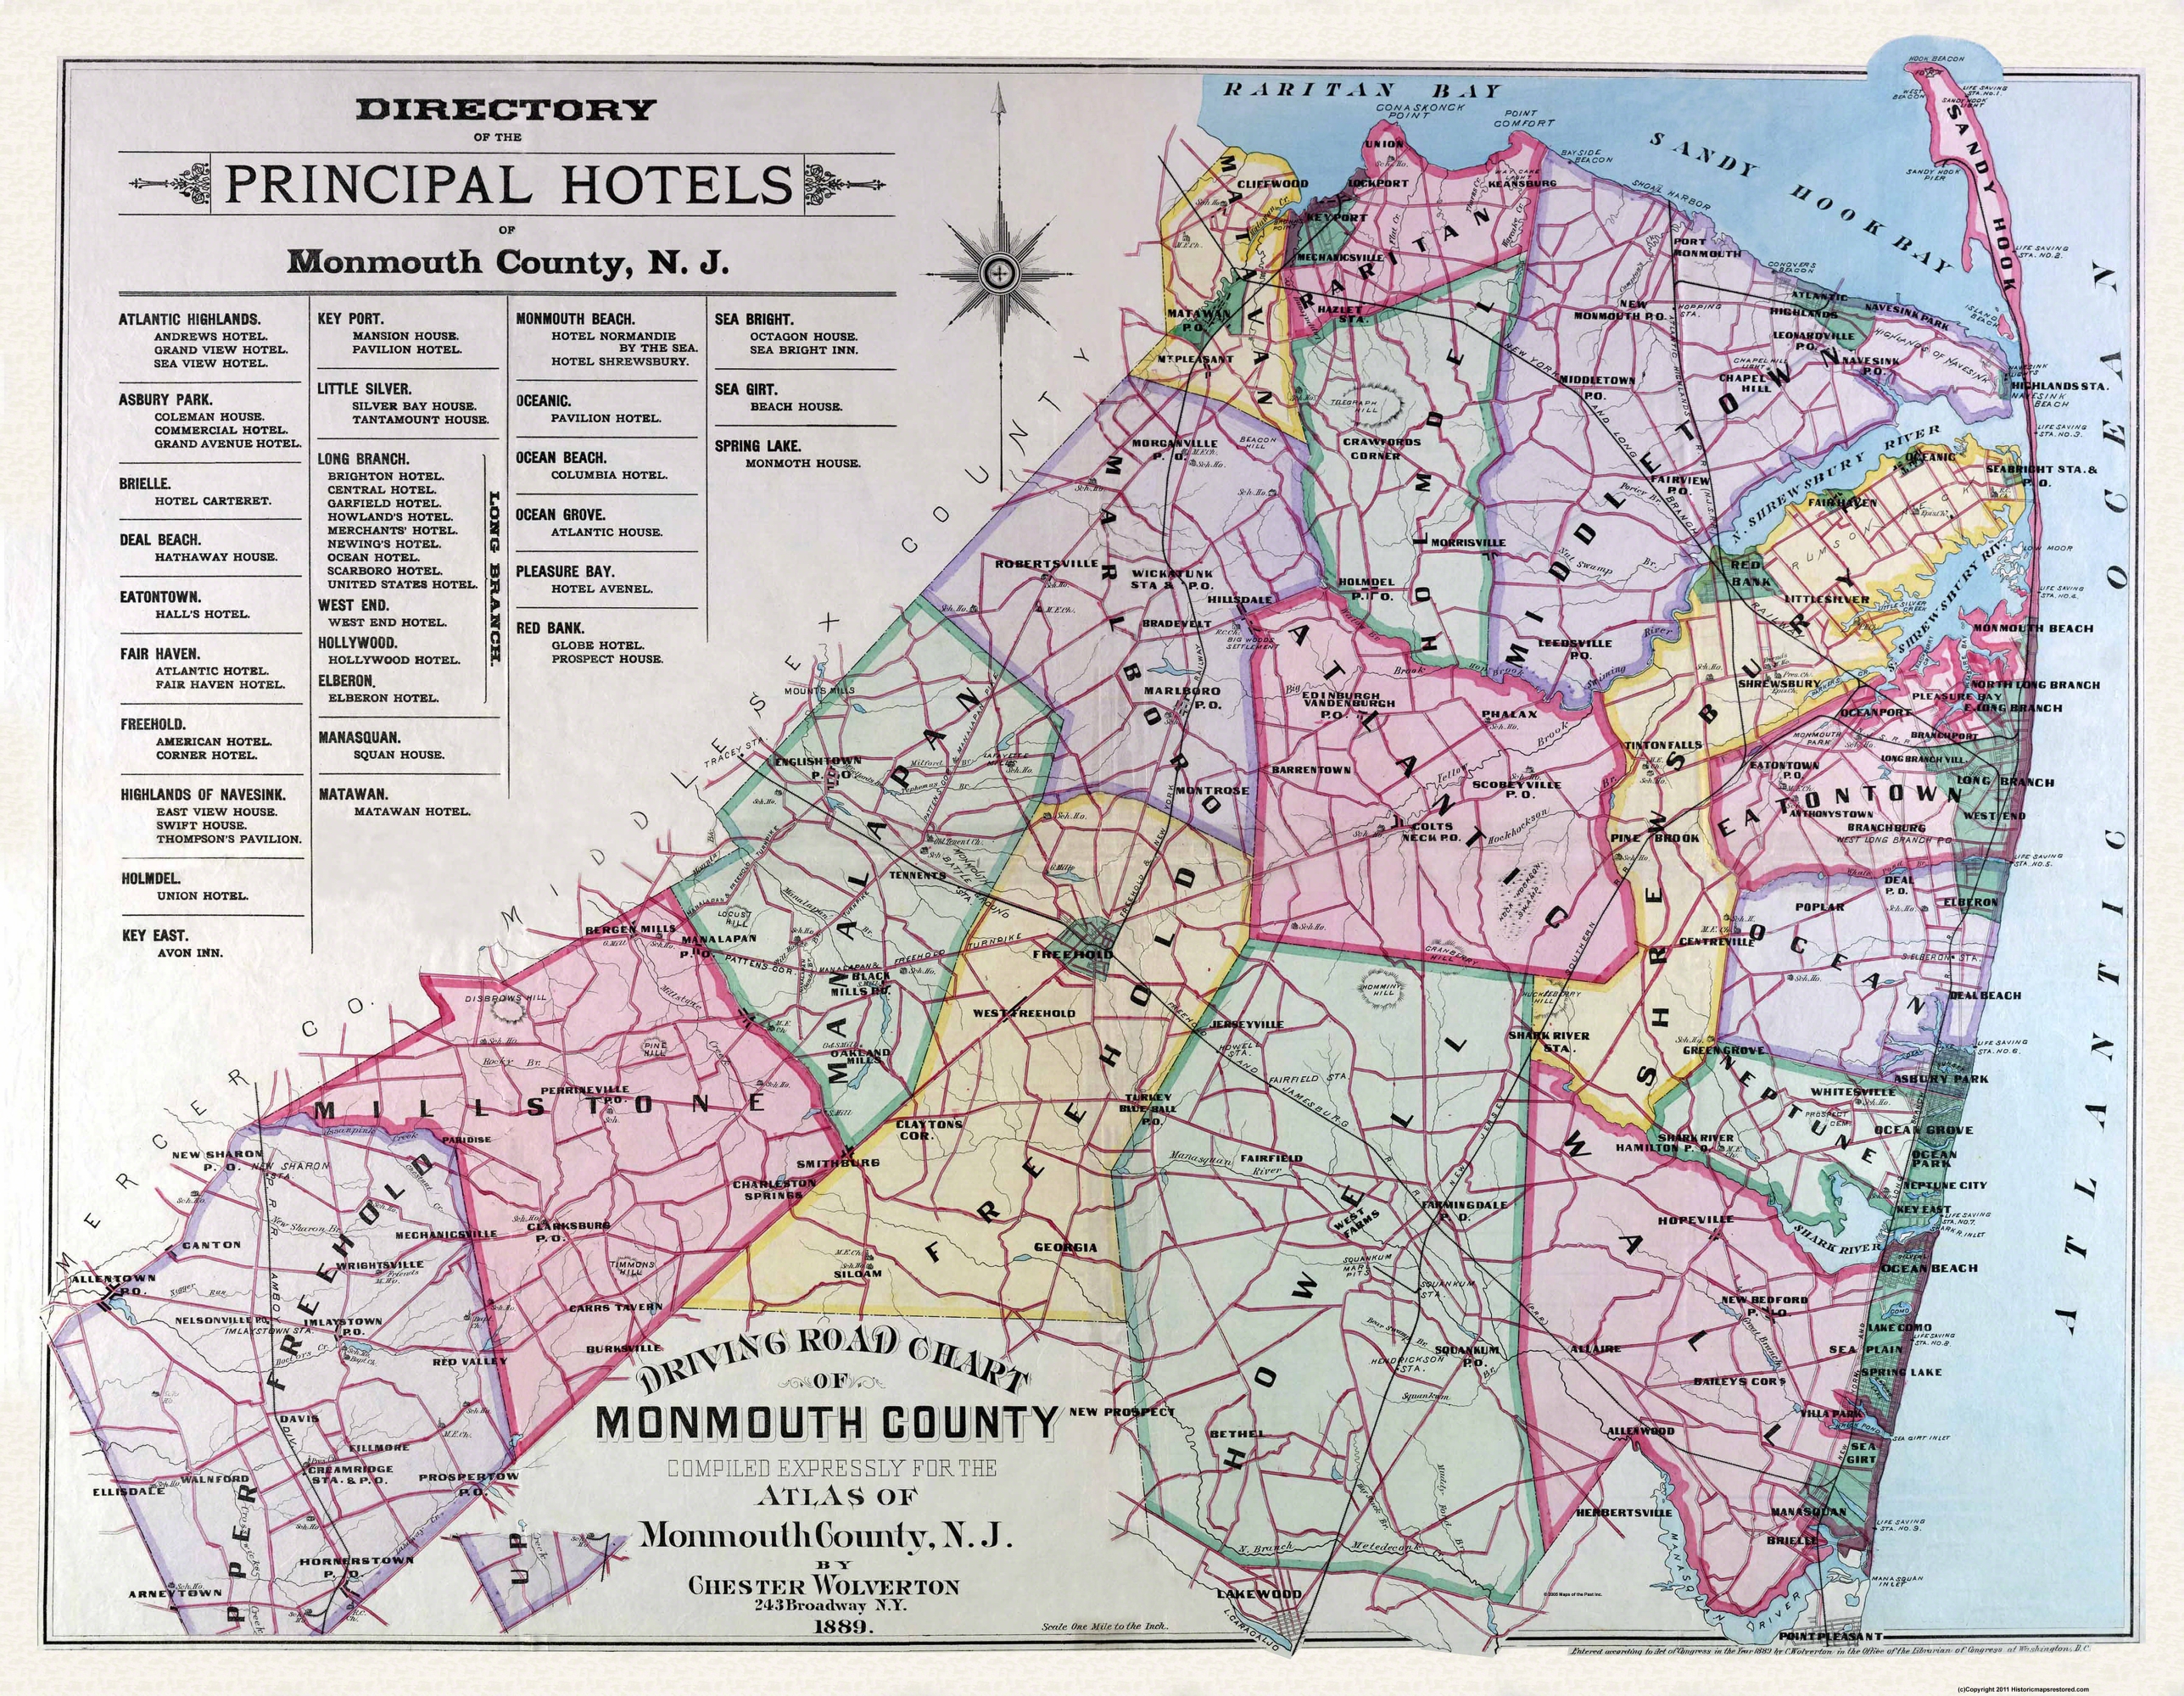 1889 SHREWSBURY TINTON FALLS PINE BROOK MONMOUTH COUNTY NEW JERSEY ATLAS MAP 